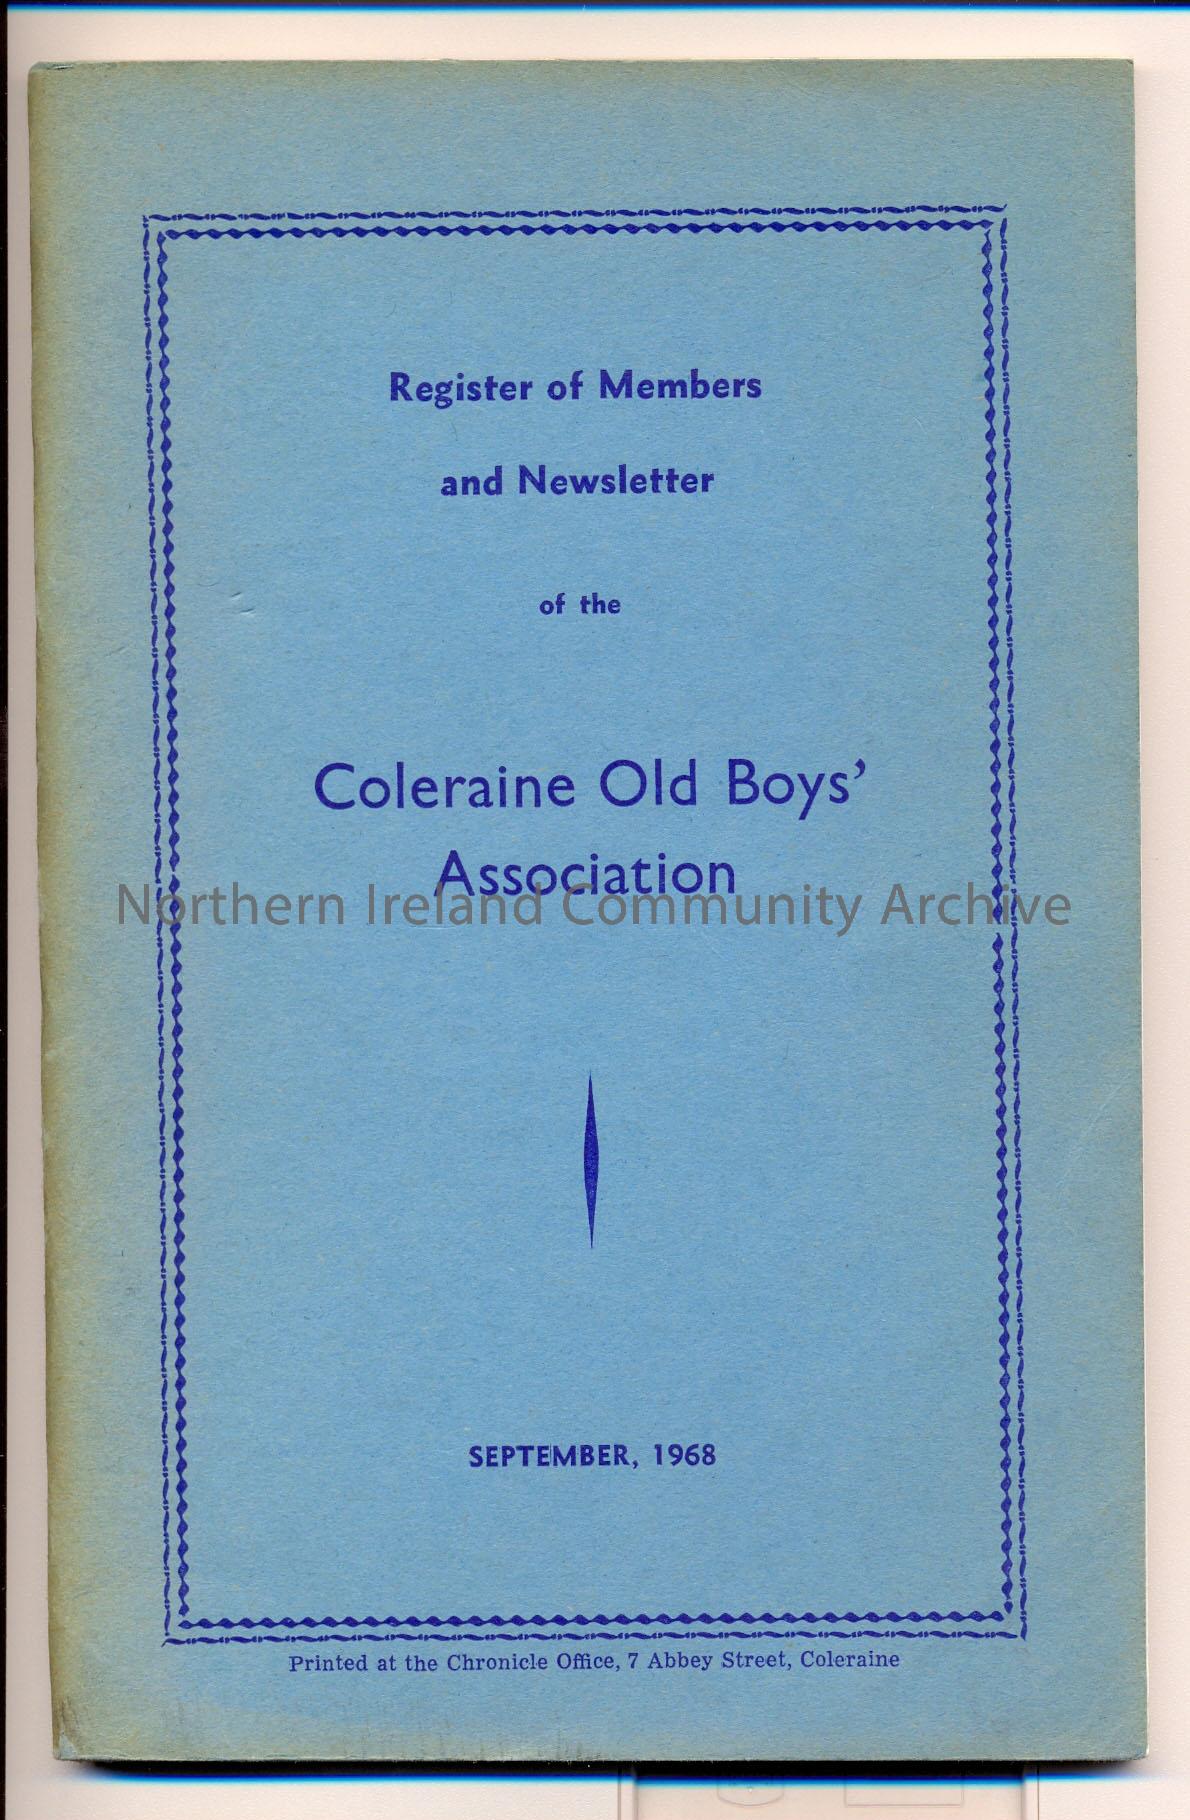 Coleraine Old Boys’ Association